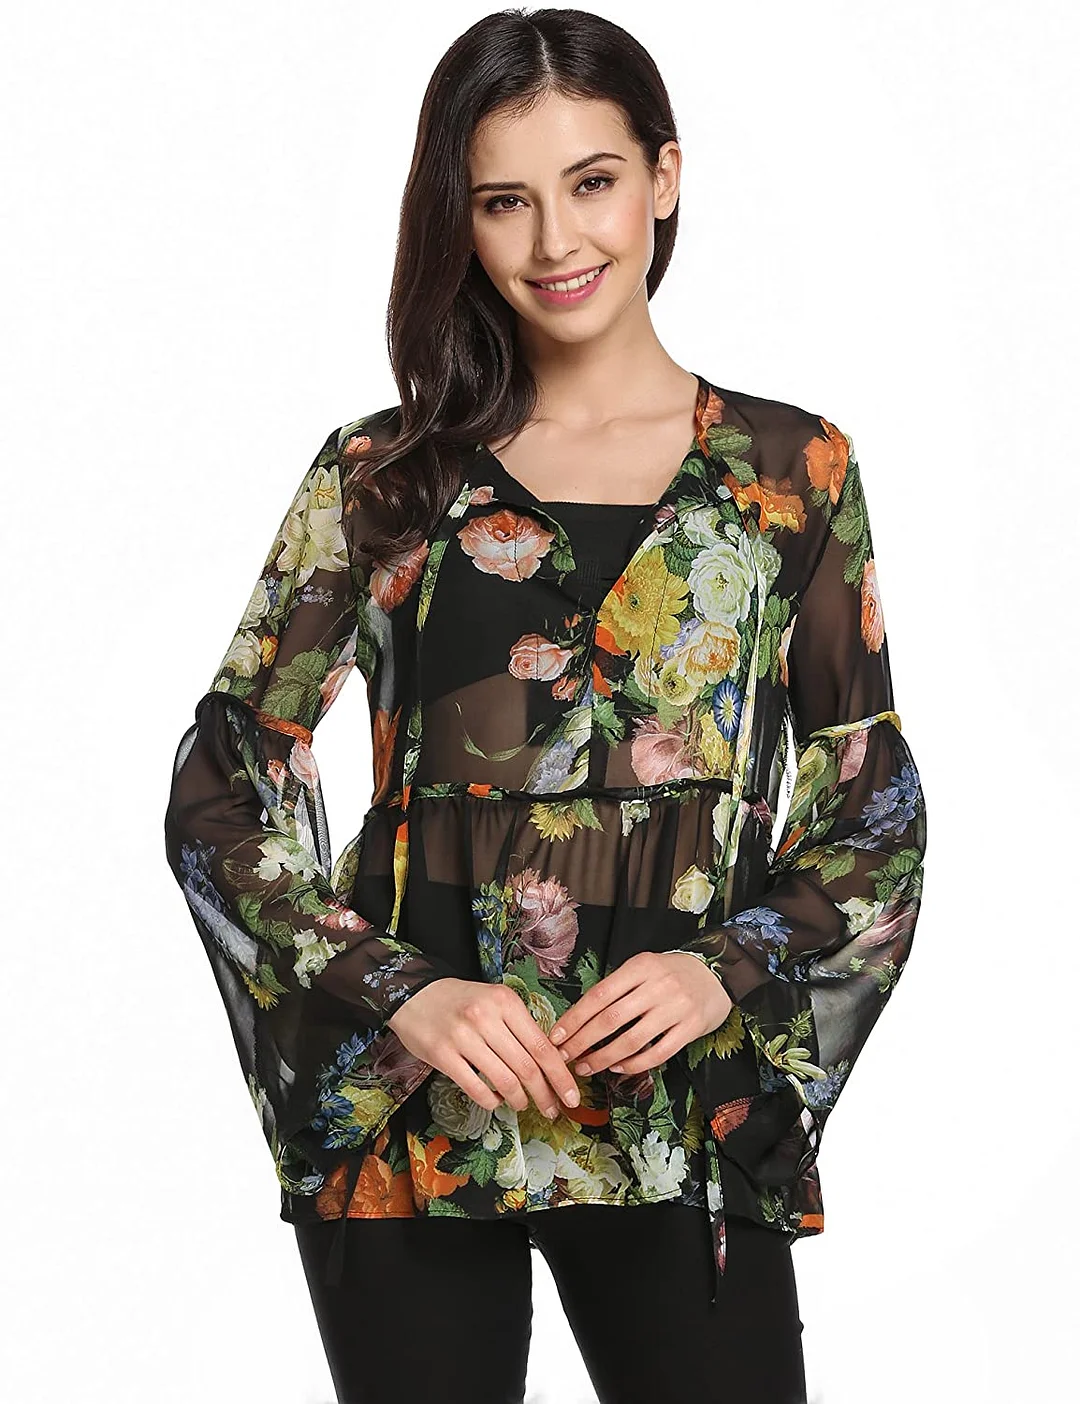 Women's Bell Sleeve Top Floral Print Chiffon Boho Blouse See Through Shirt